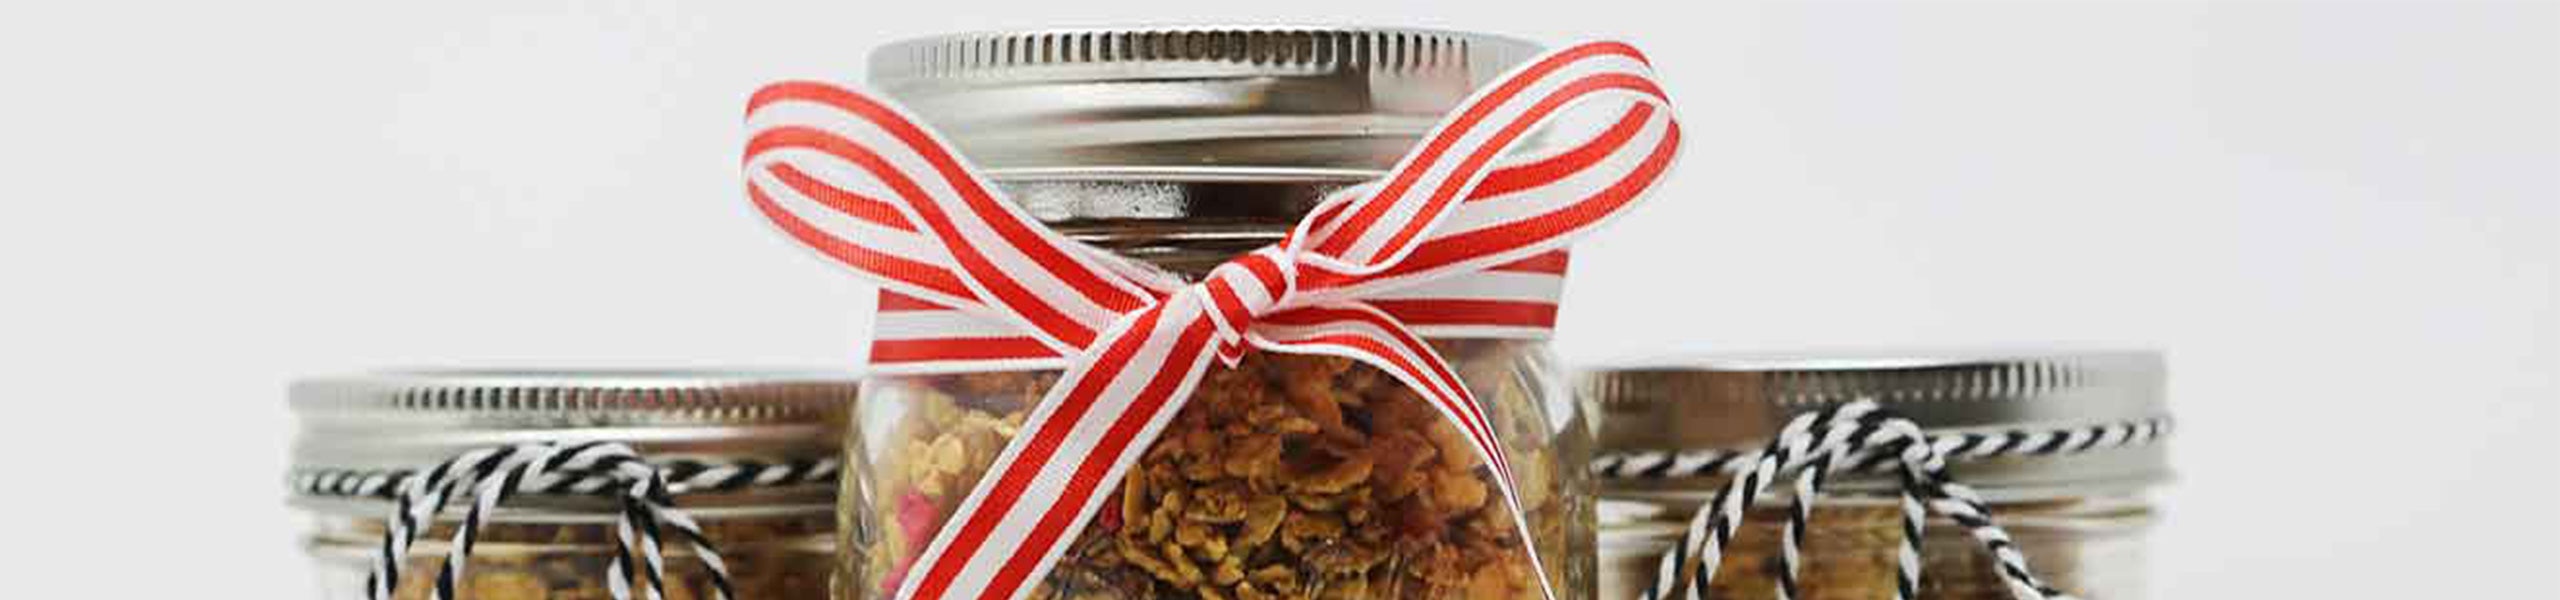 Jars of homemade treats tied with ribbon